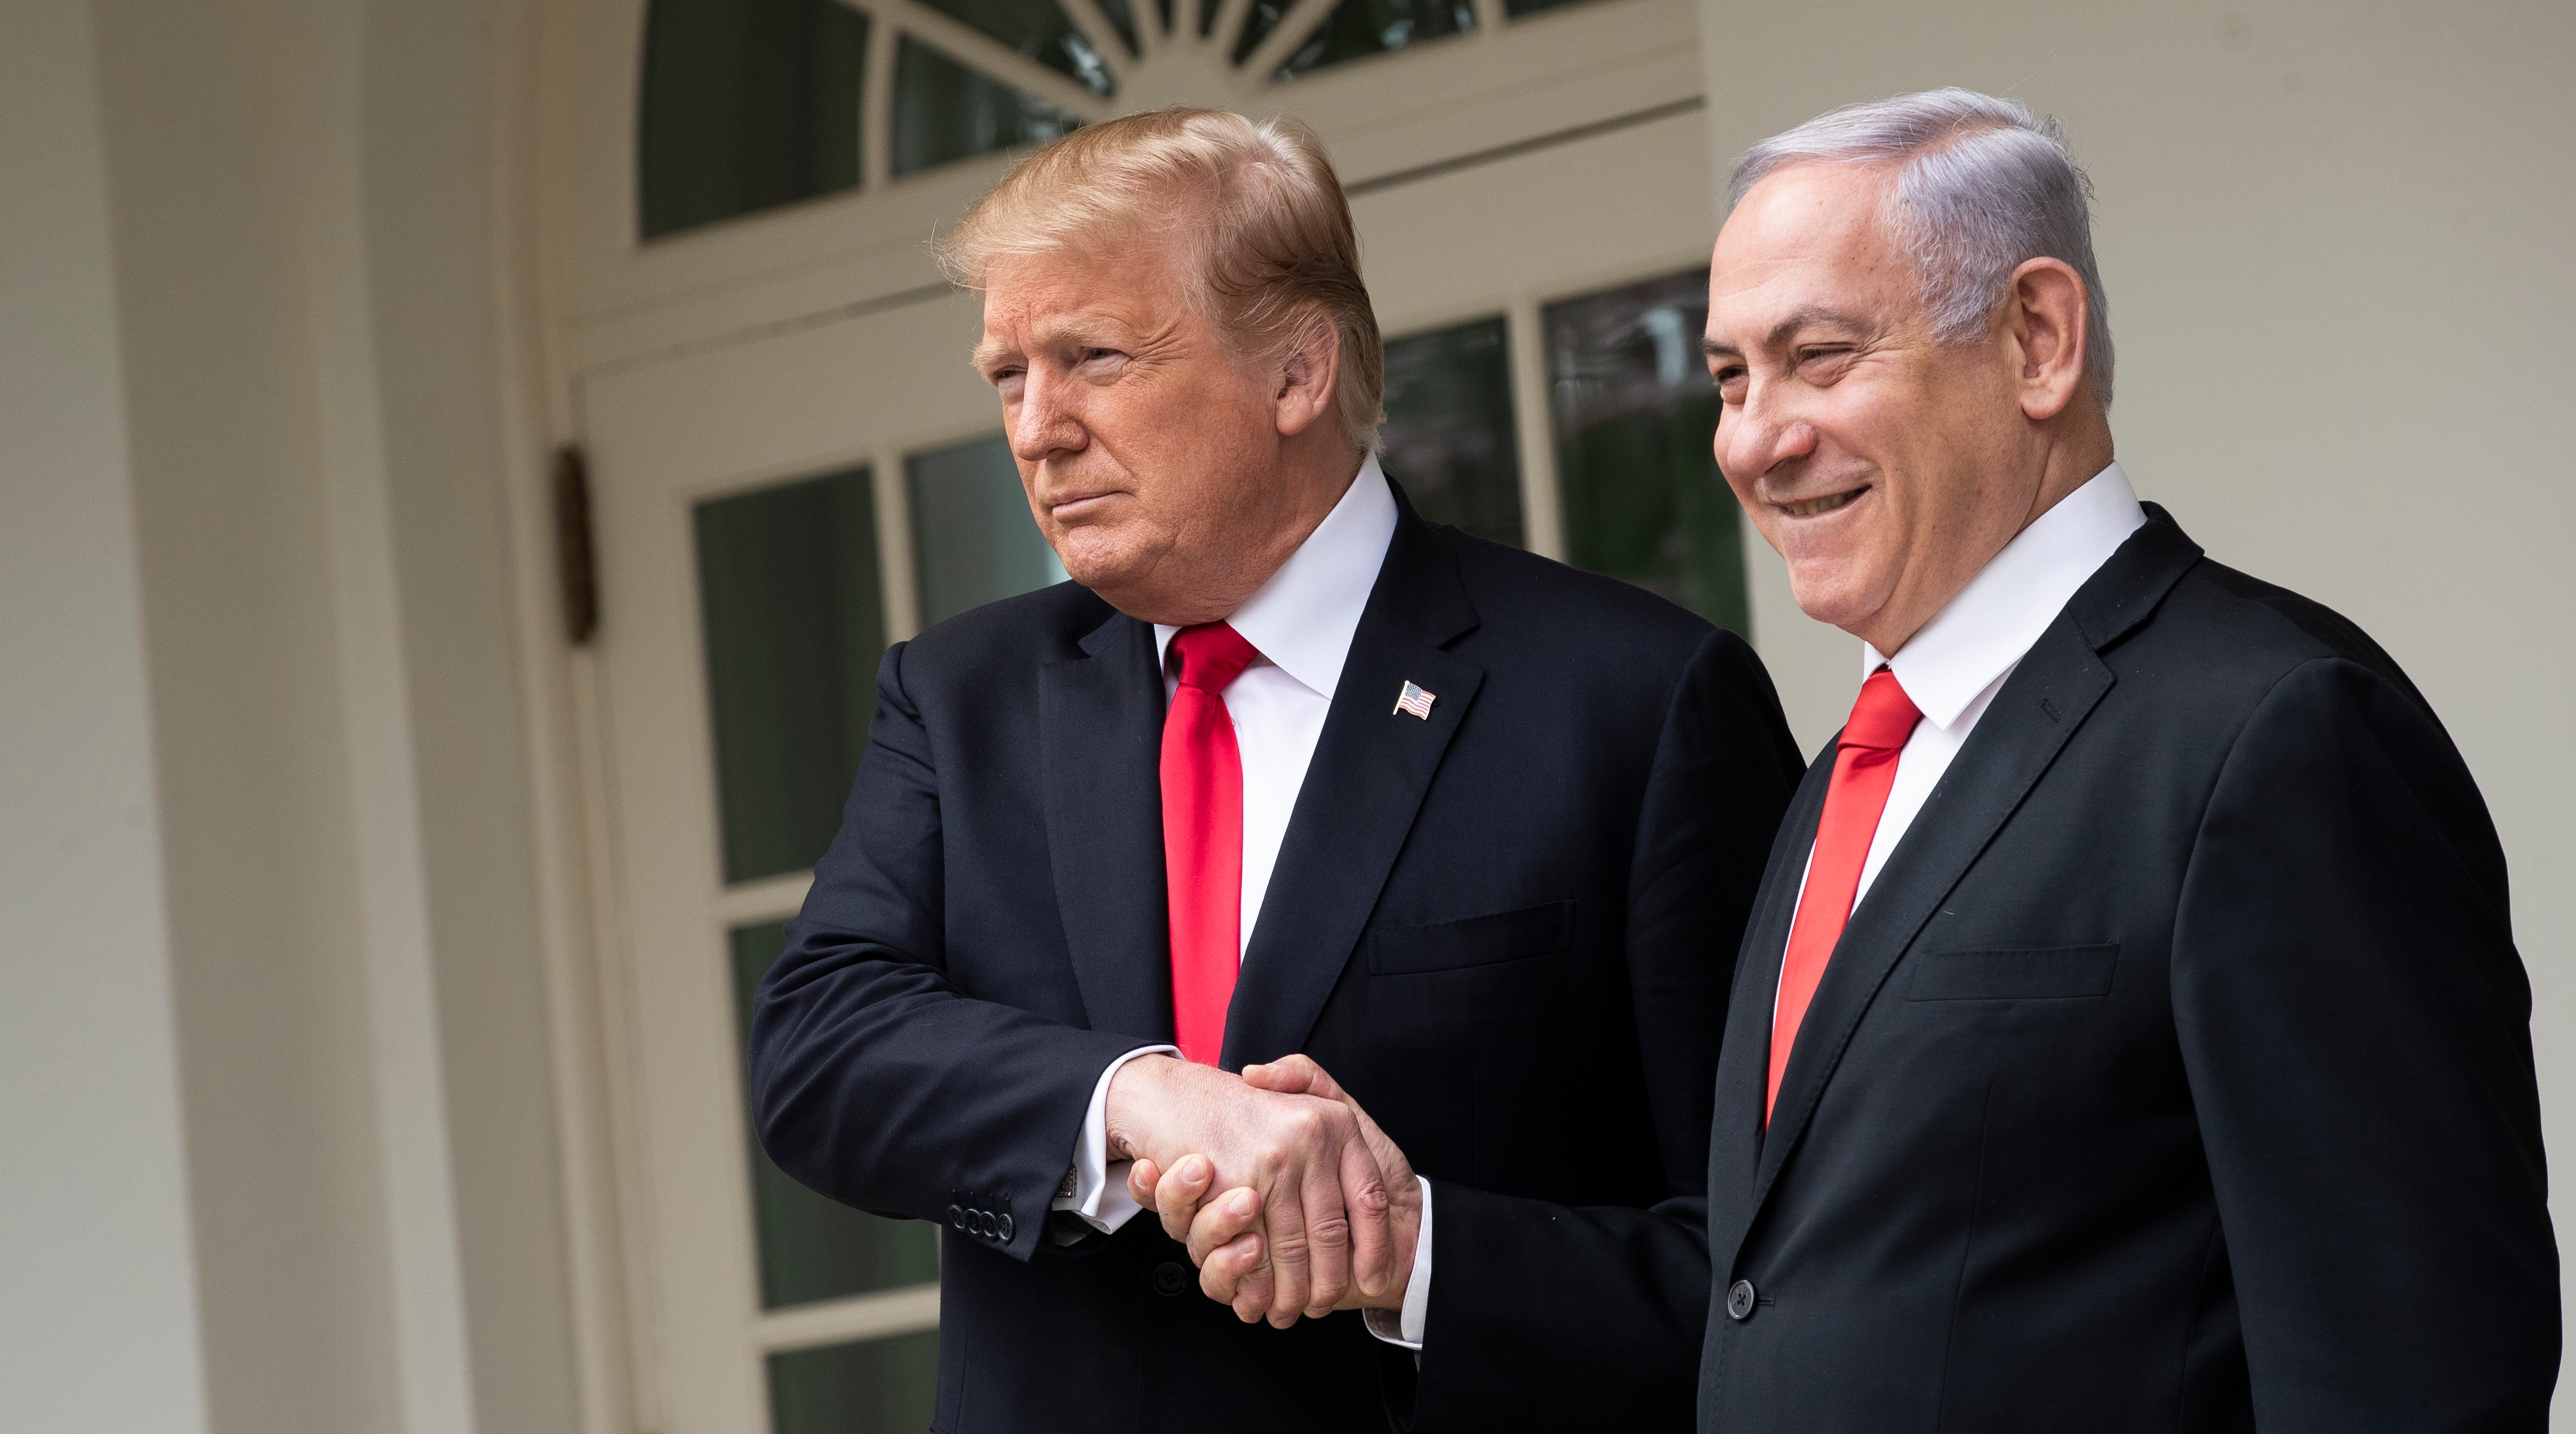 Donald Trump and Bibi Netanyahu